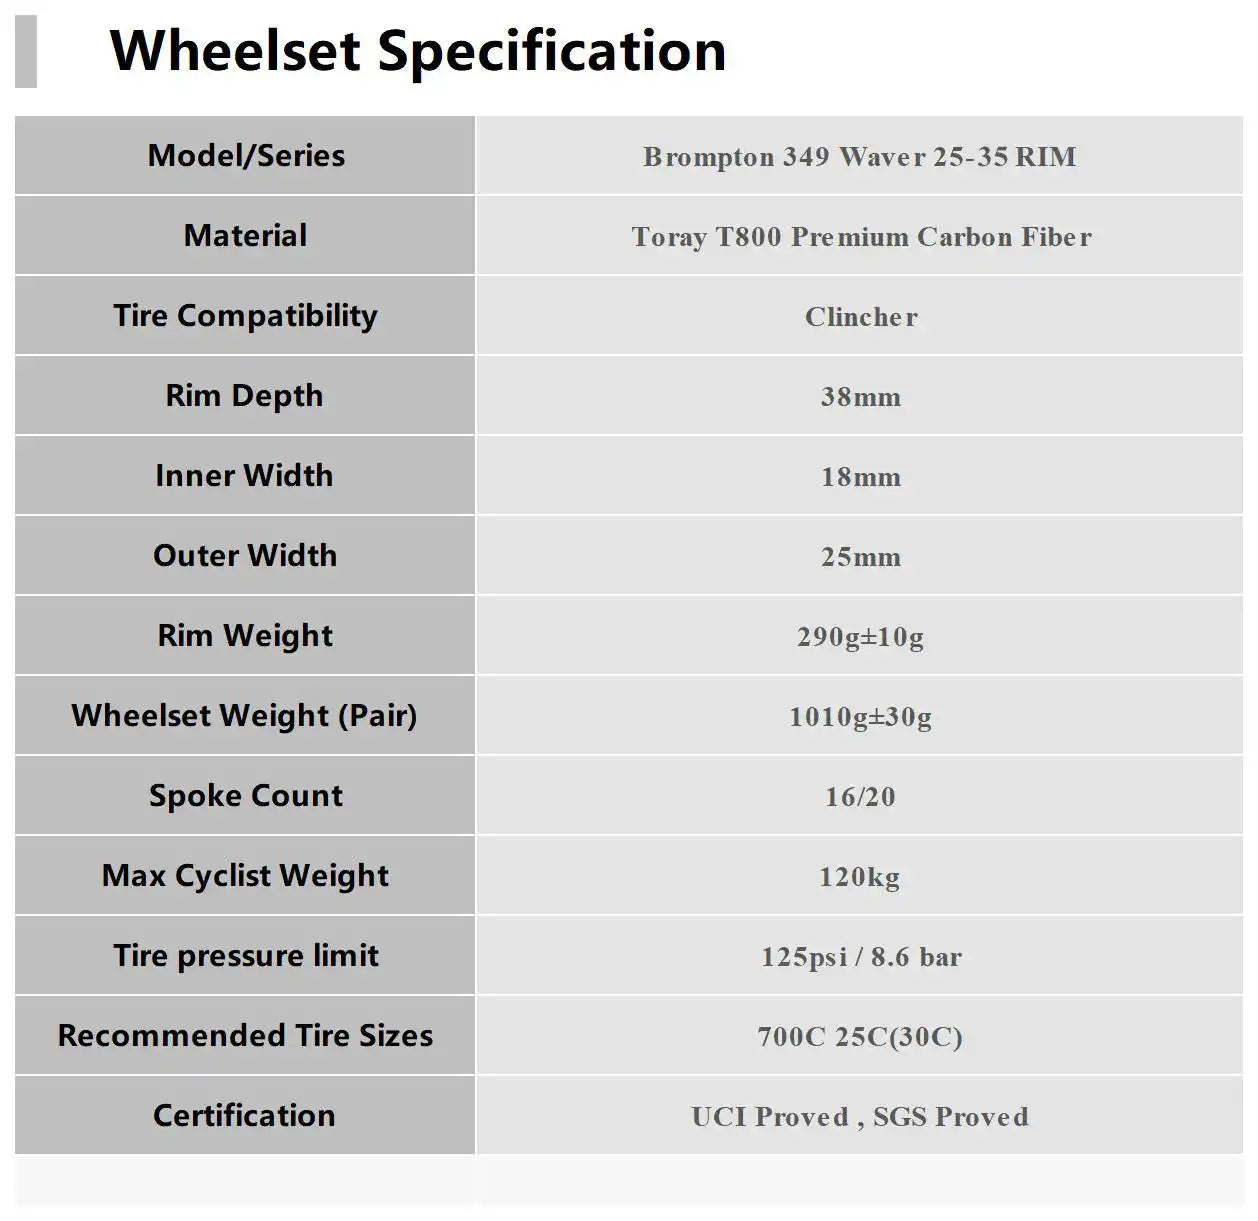 Superteam 349 Waver Carbon Wheelset 25-35 RIM Brake For Brompton